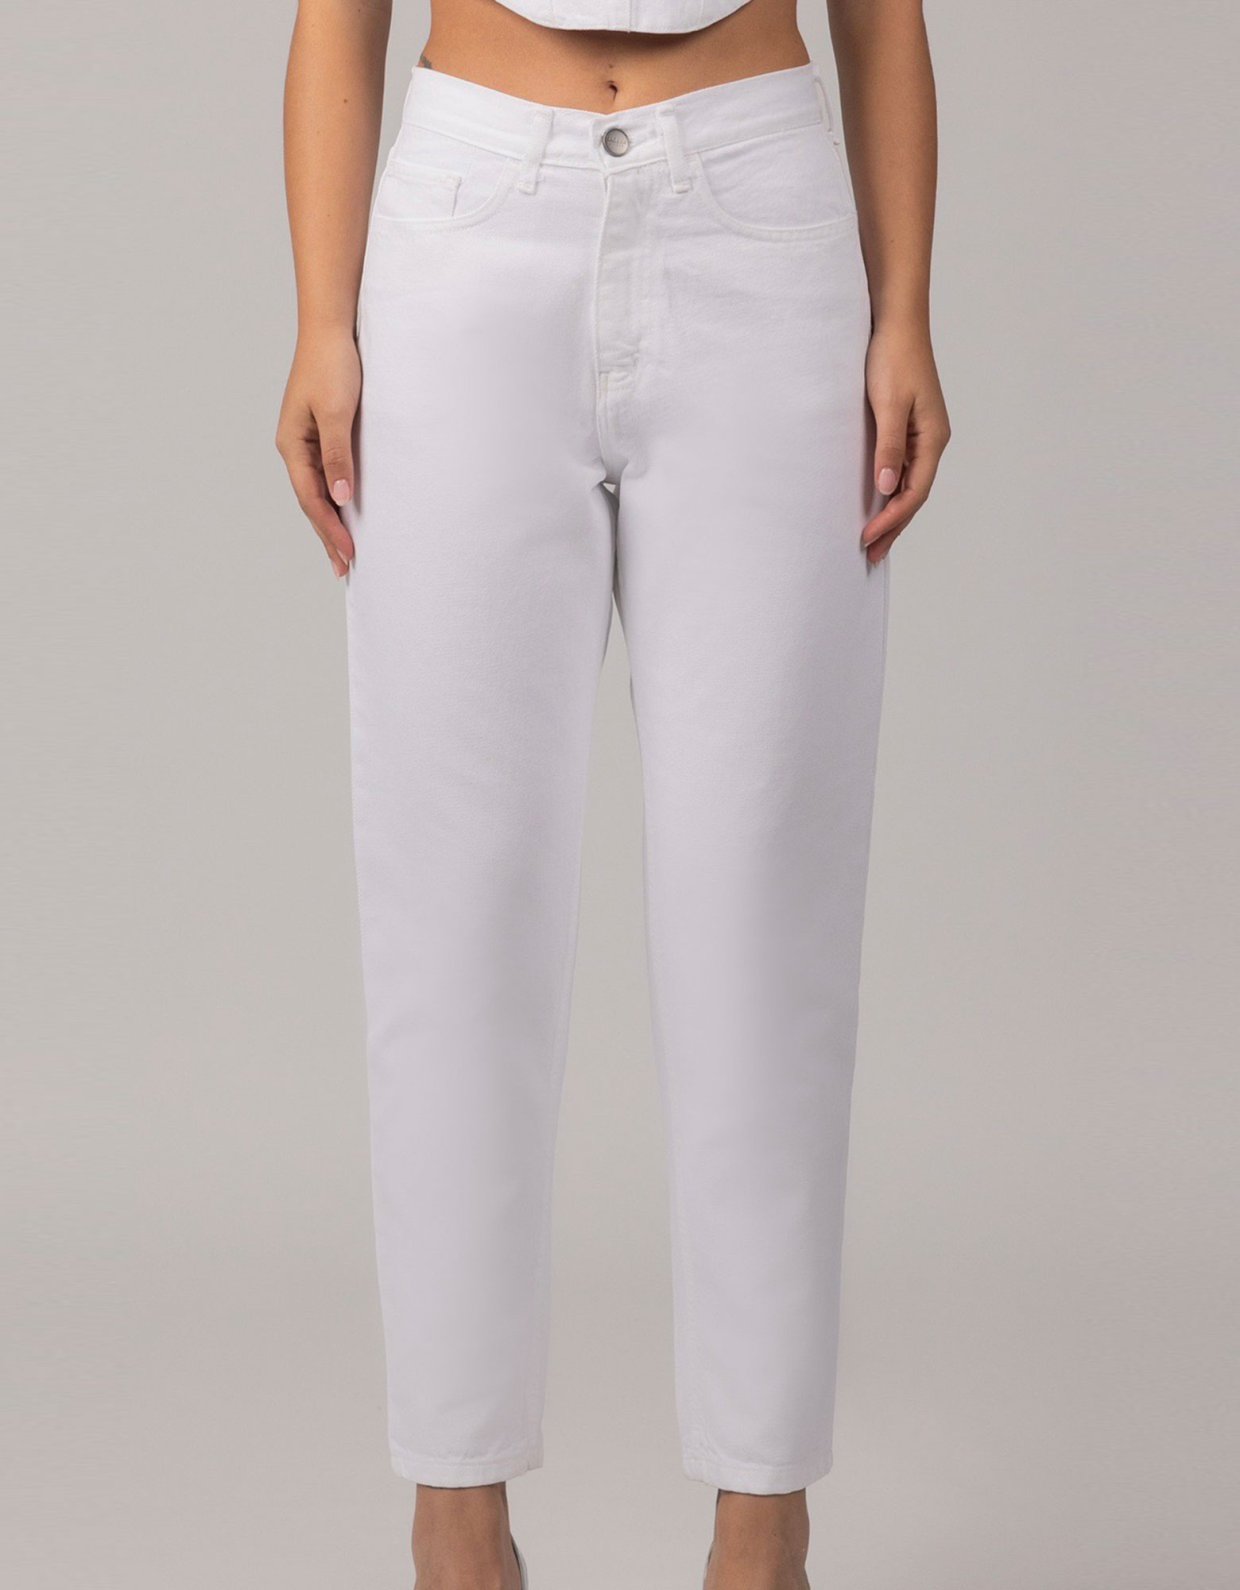 Sac & CO Jeans Angela regular fit white denim